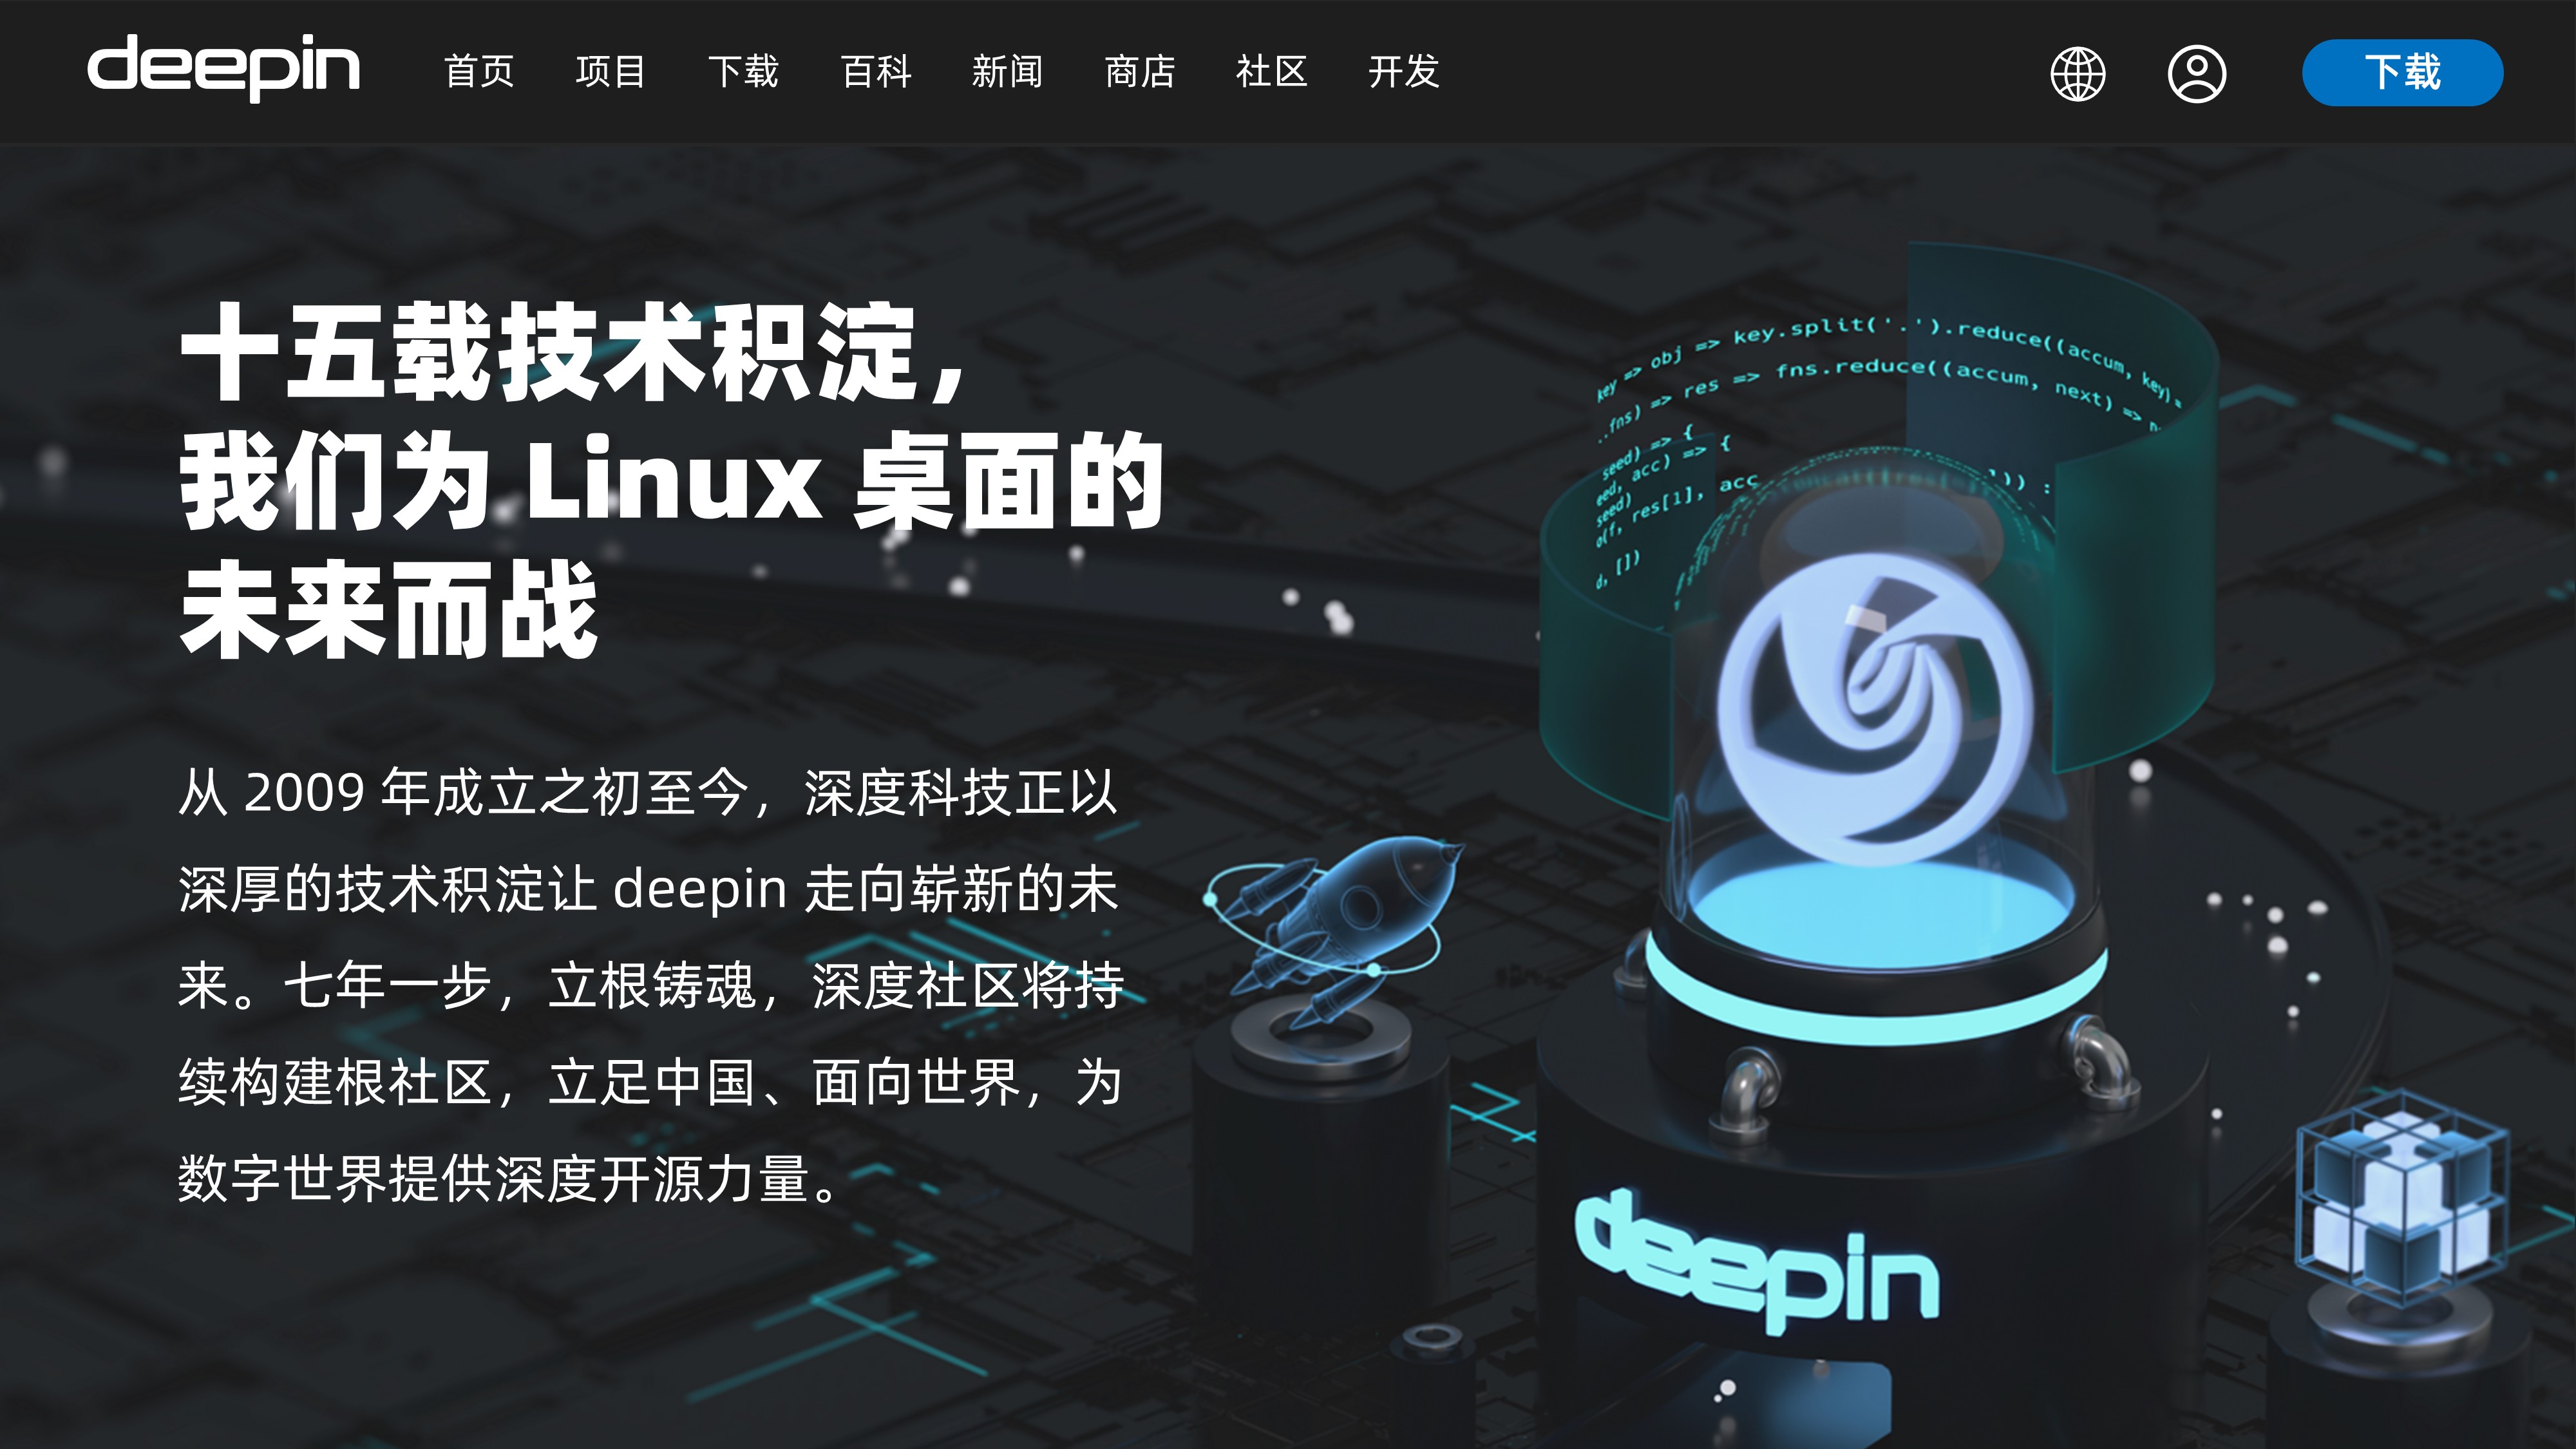 deepin-website_2.jpg